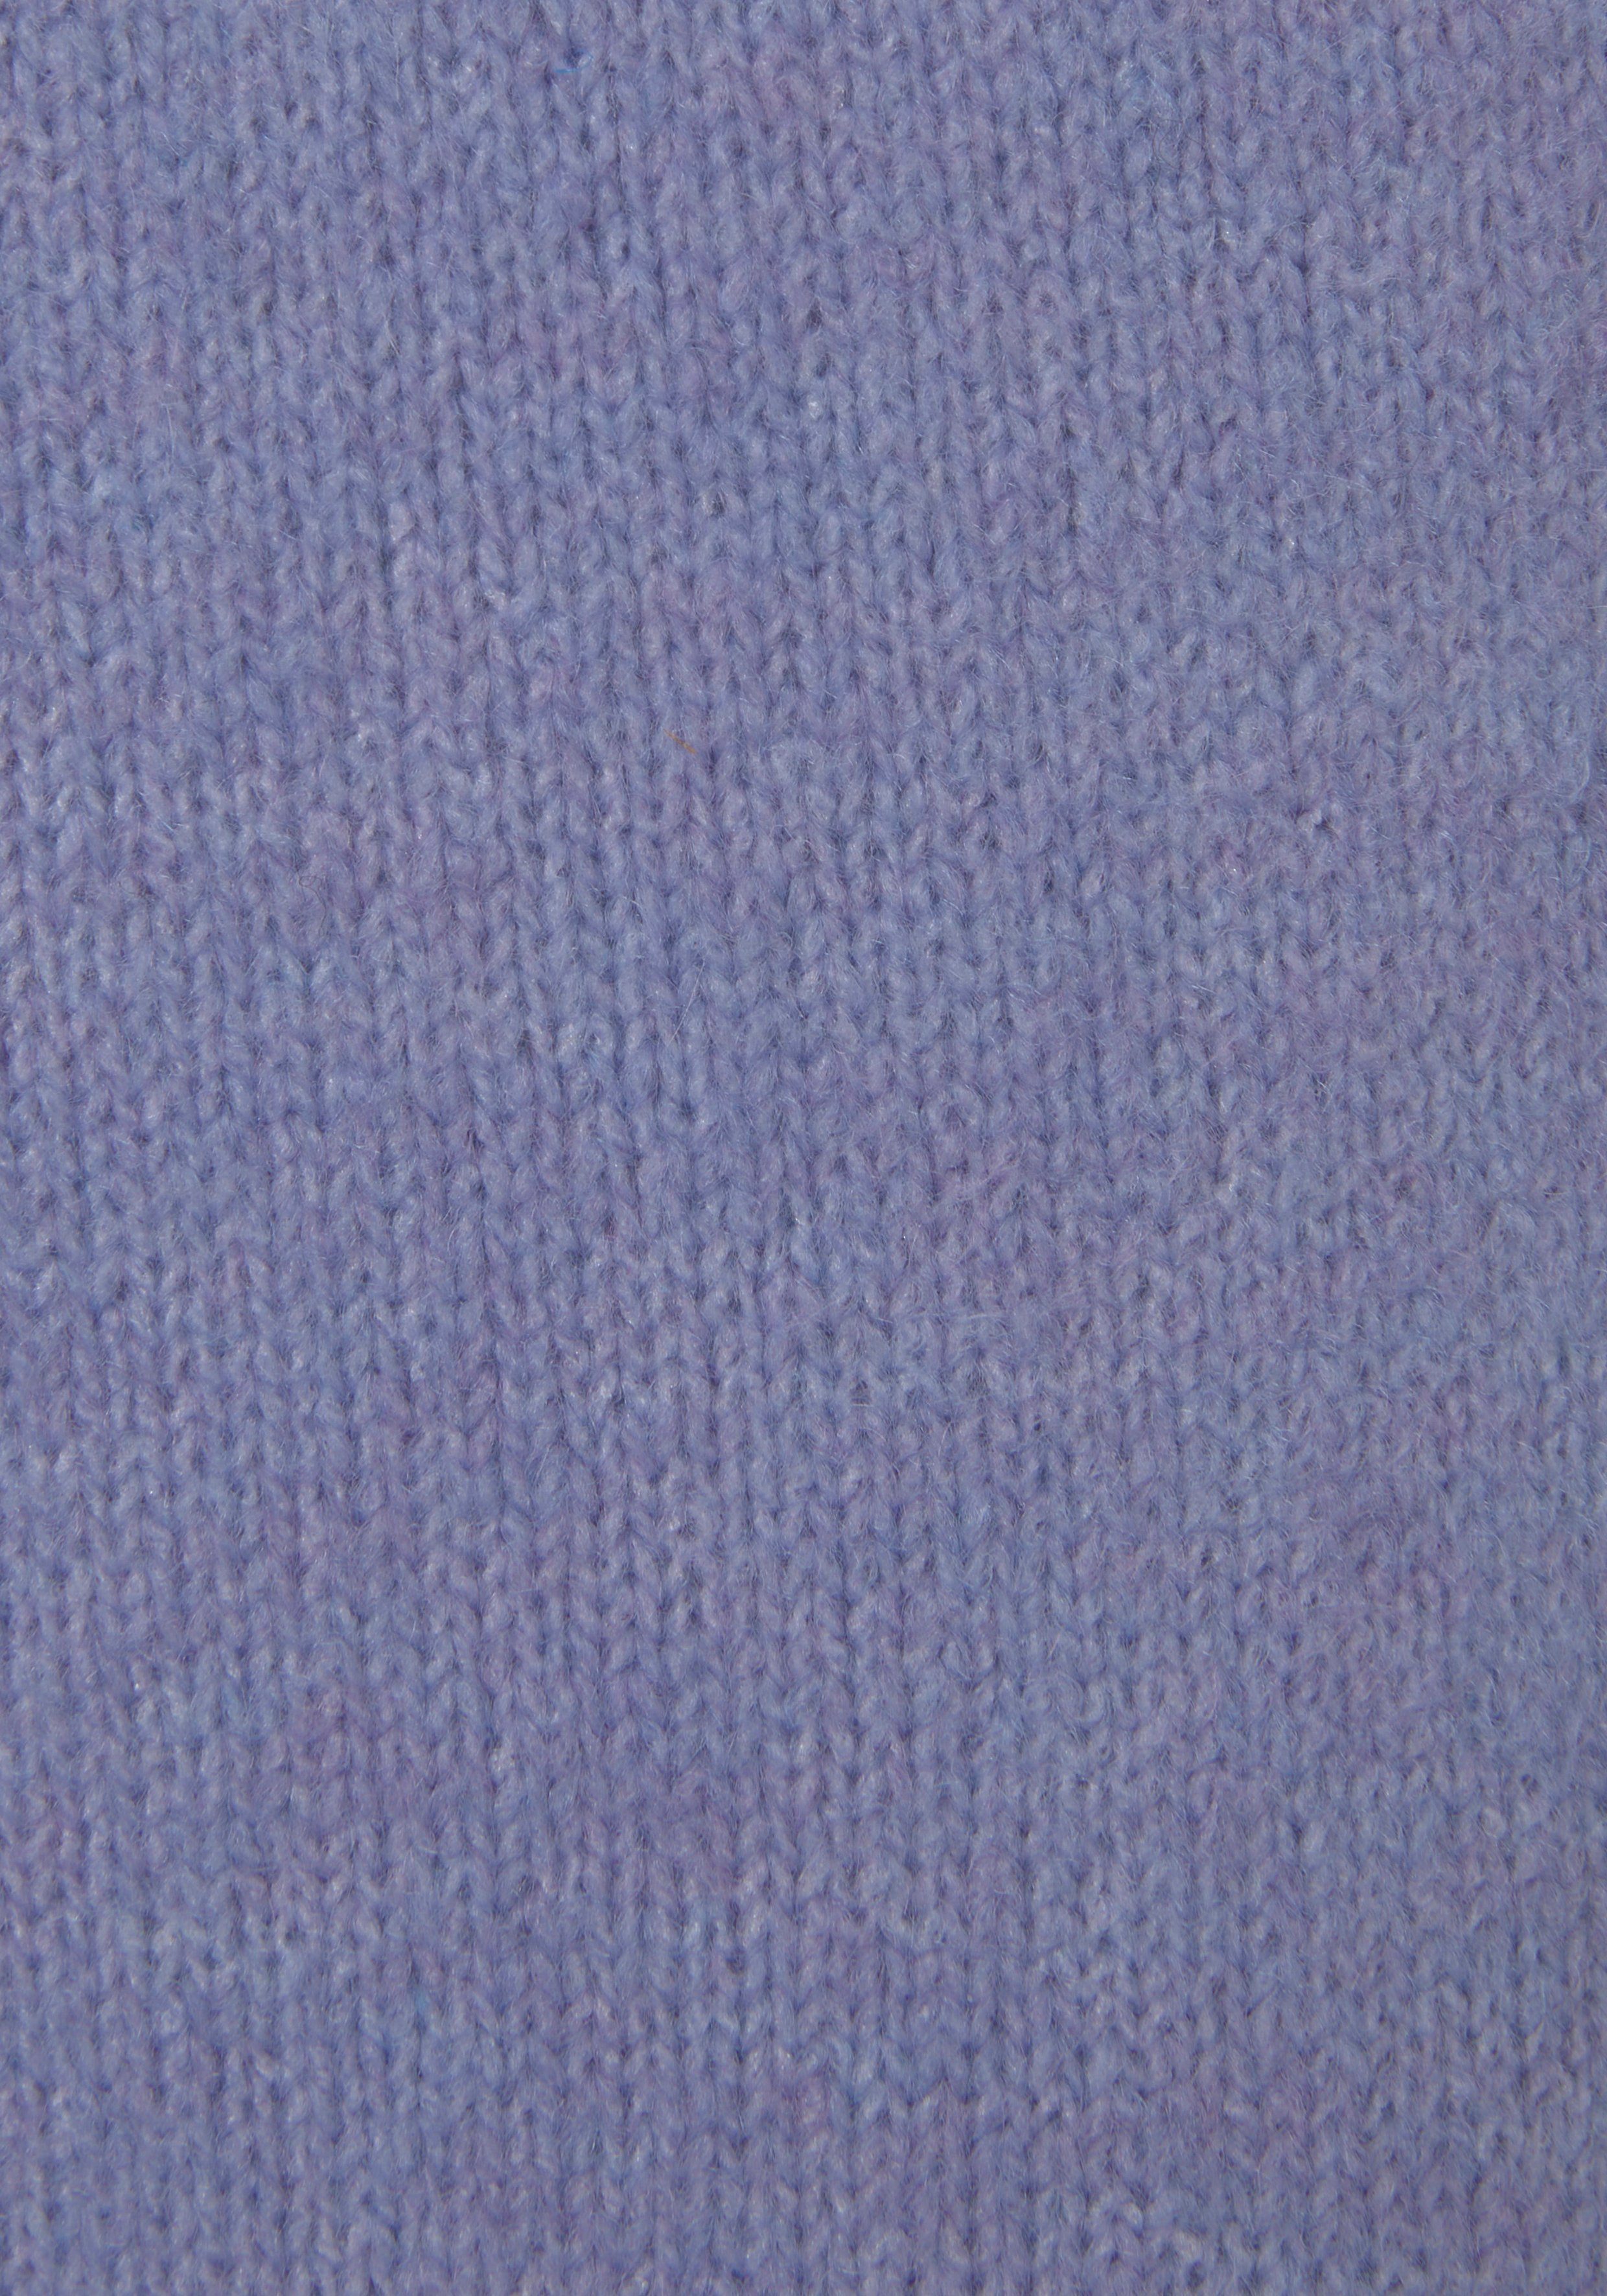 LASCANA Strickhose -Loungehose mit hellblau Loungewear Rippbündchen